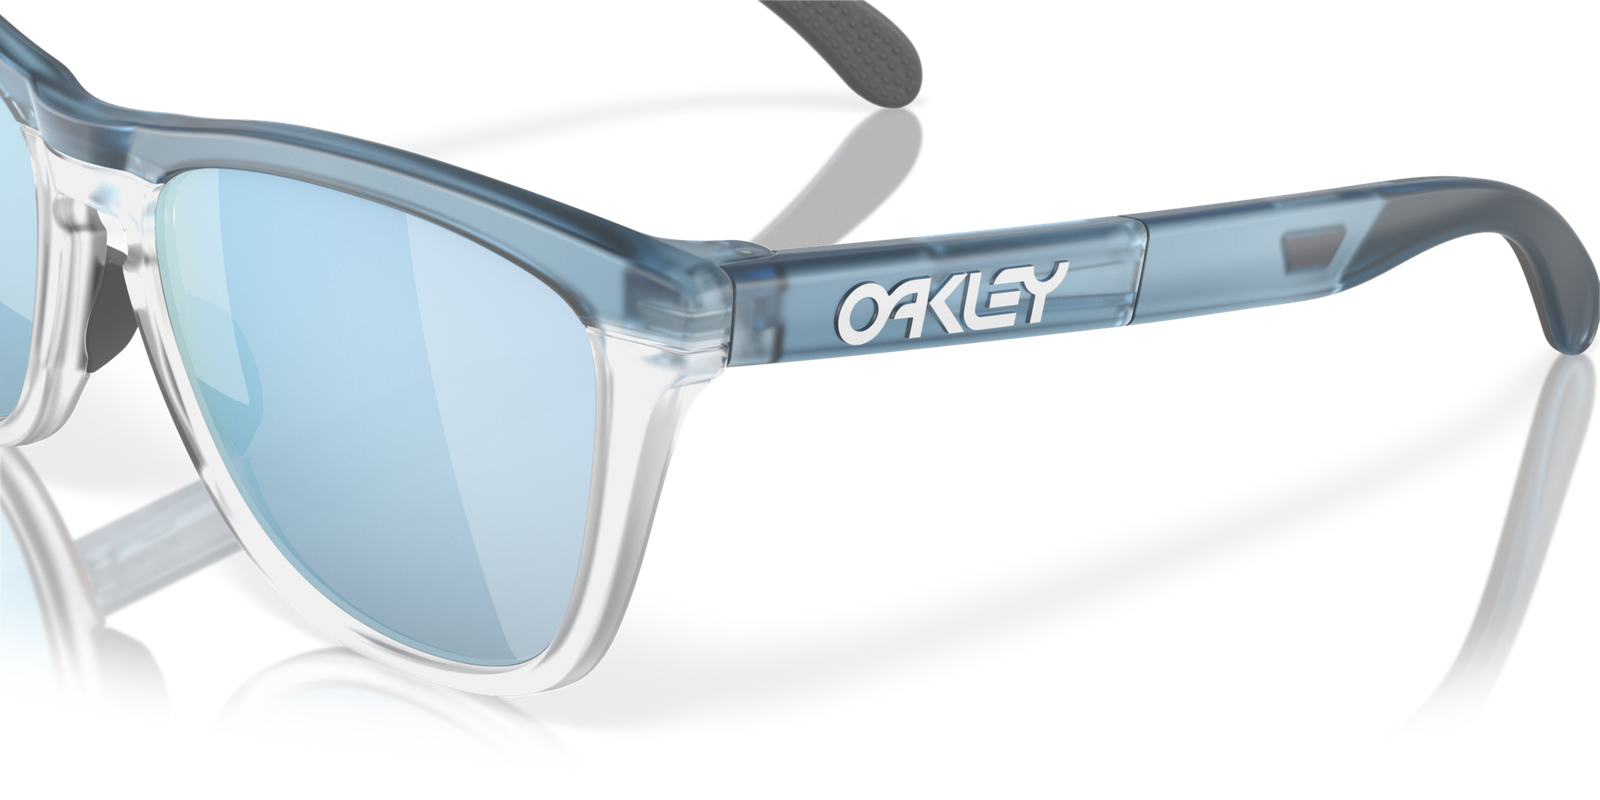 OAKLEY OO9284A Frogskins Range (Low Bridge Fit) Matte Stonewash - Unisex Sunglasses, Prizm Deep Water Polarized Lens